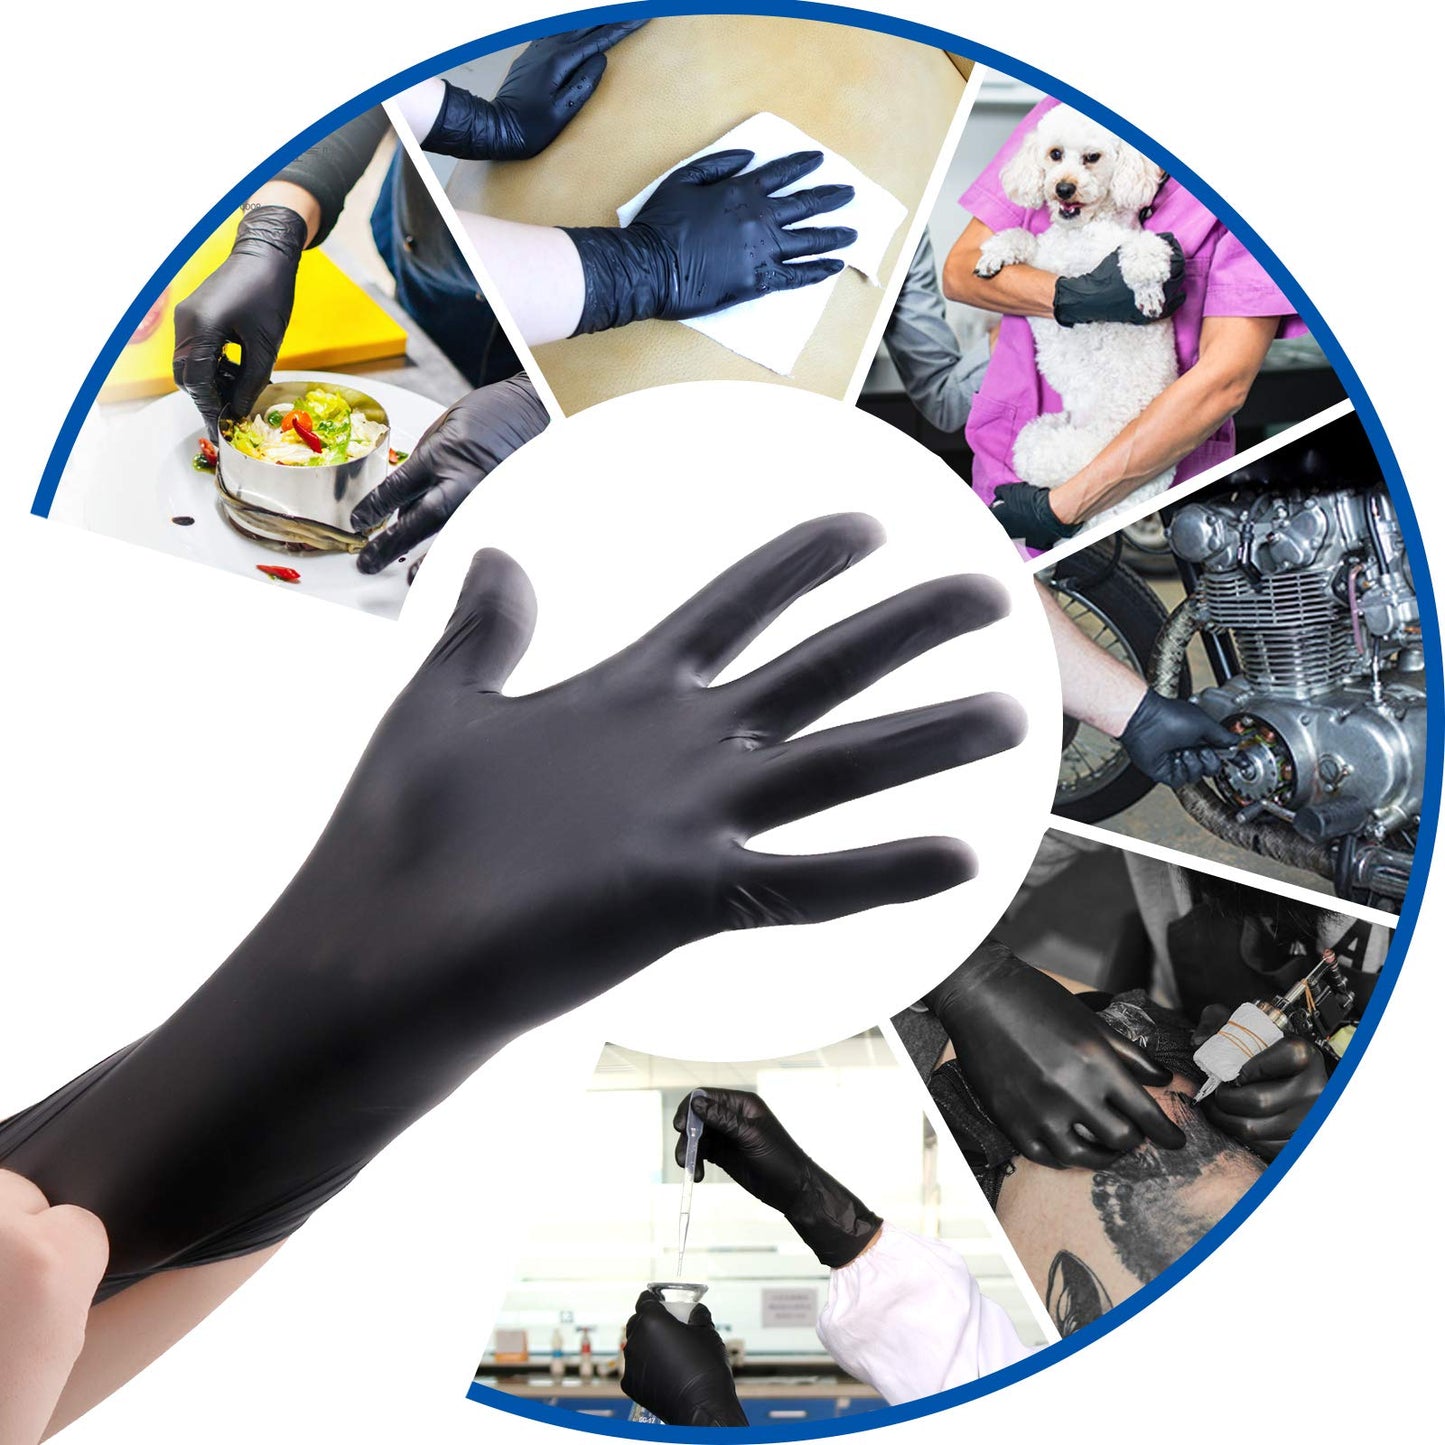 100pack/150gpowder Free Black Nitrile Gloves Kitchen Household Clean